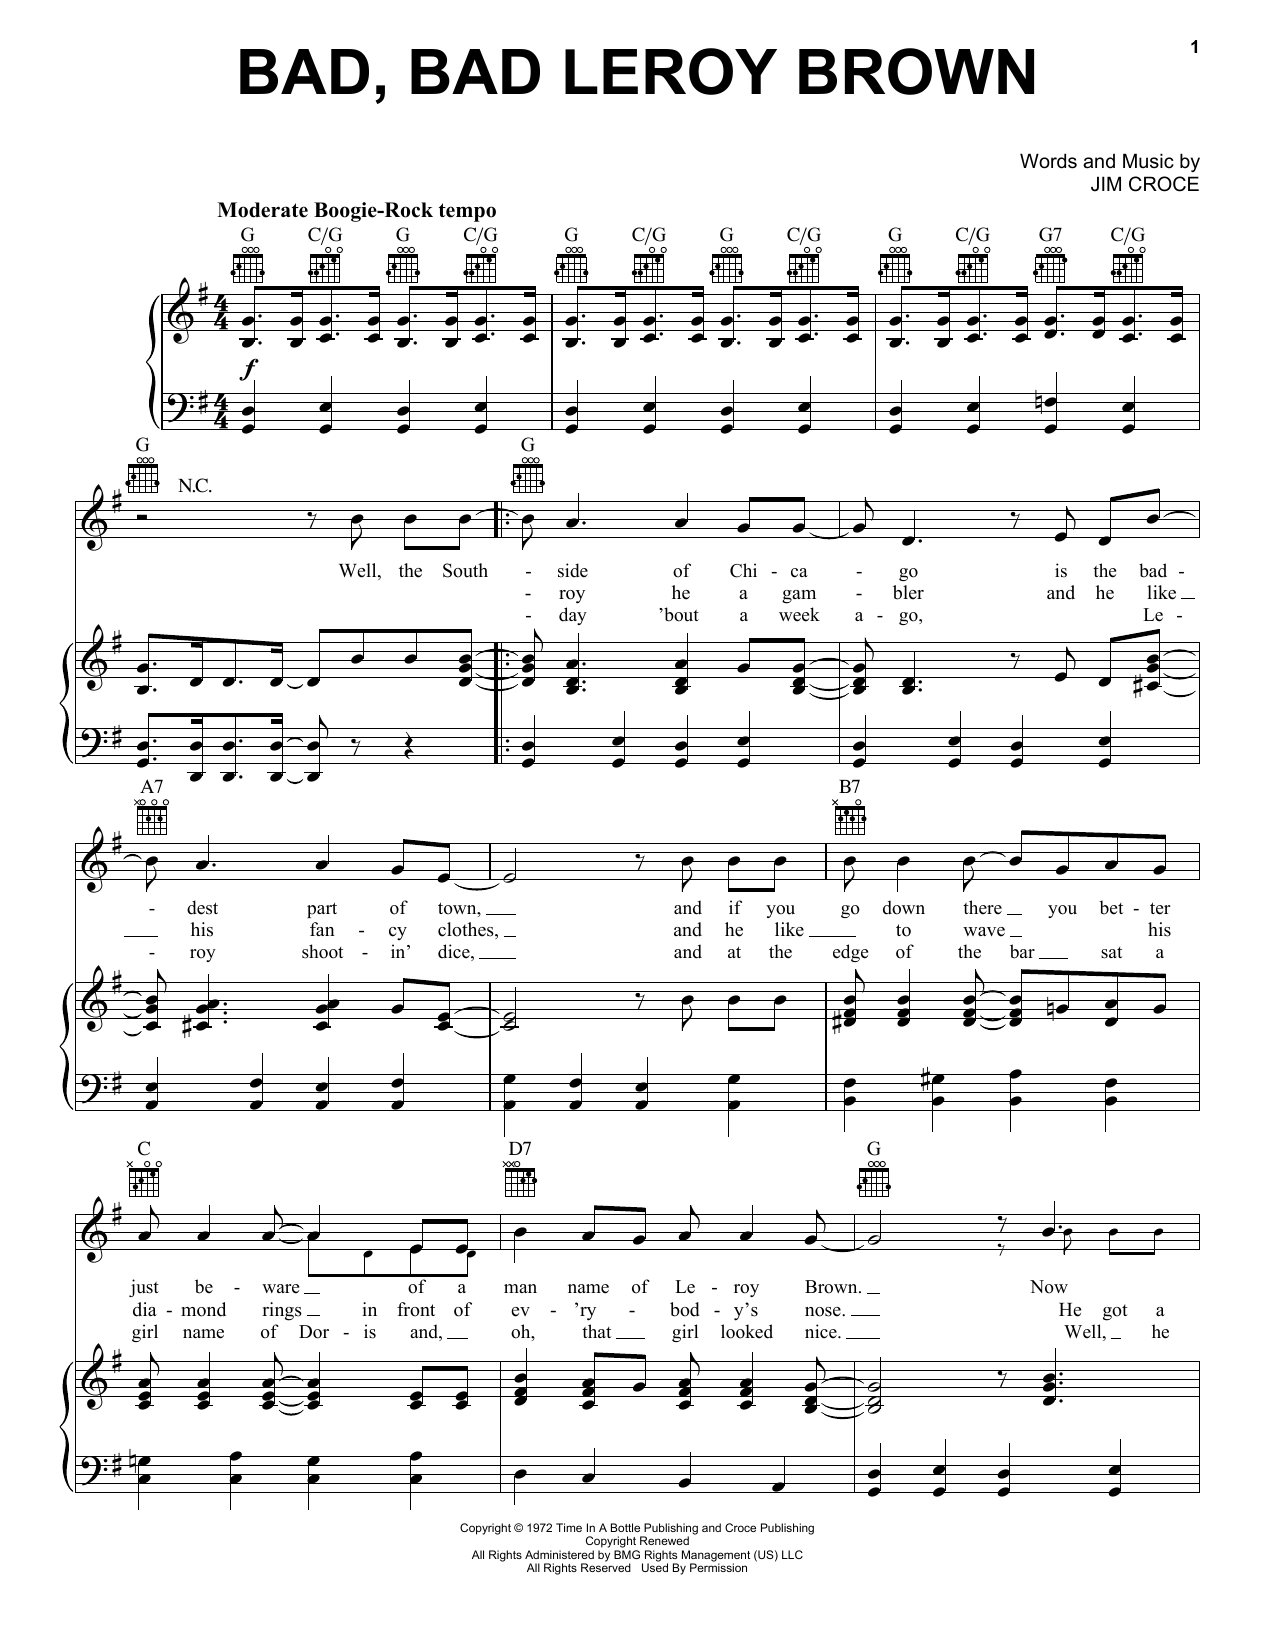 Jim Croce Bad, Bad Leroy Brown Sheet Music Notes & Chords for Lyrics & Chords - Download or Print PDF